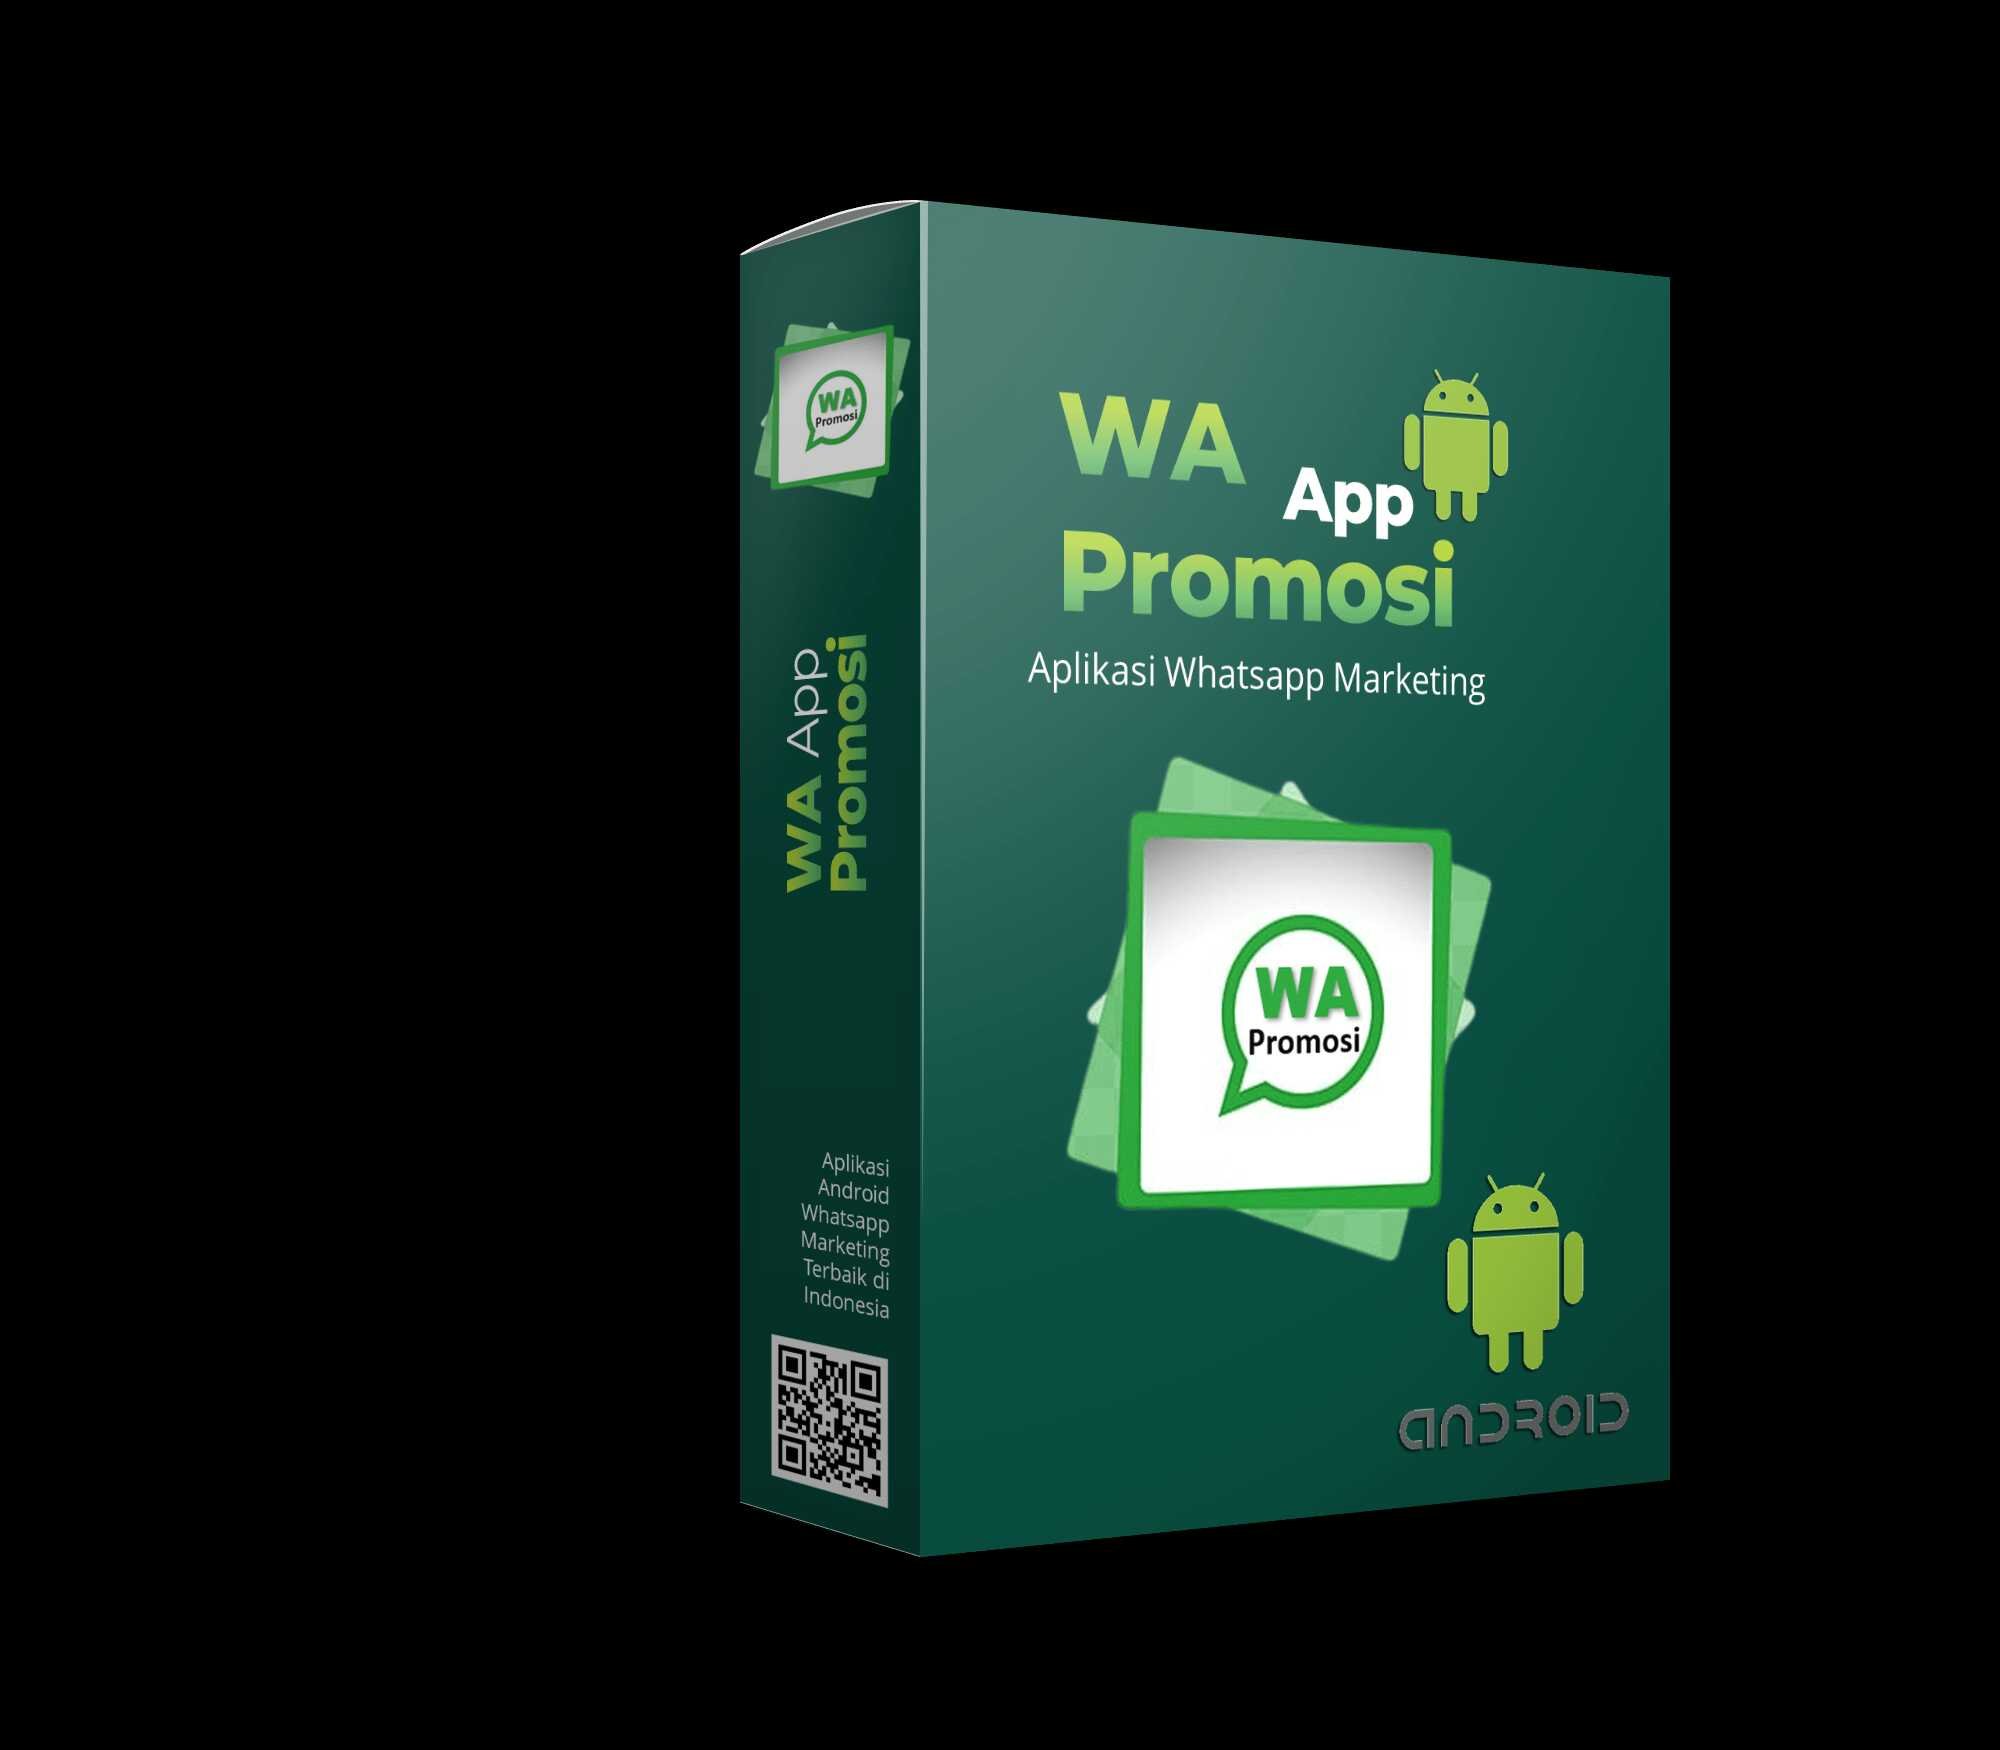 wa promosi app by adifa digital